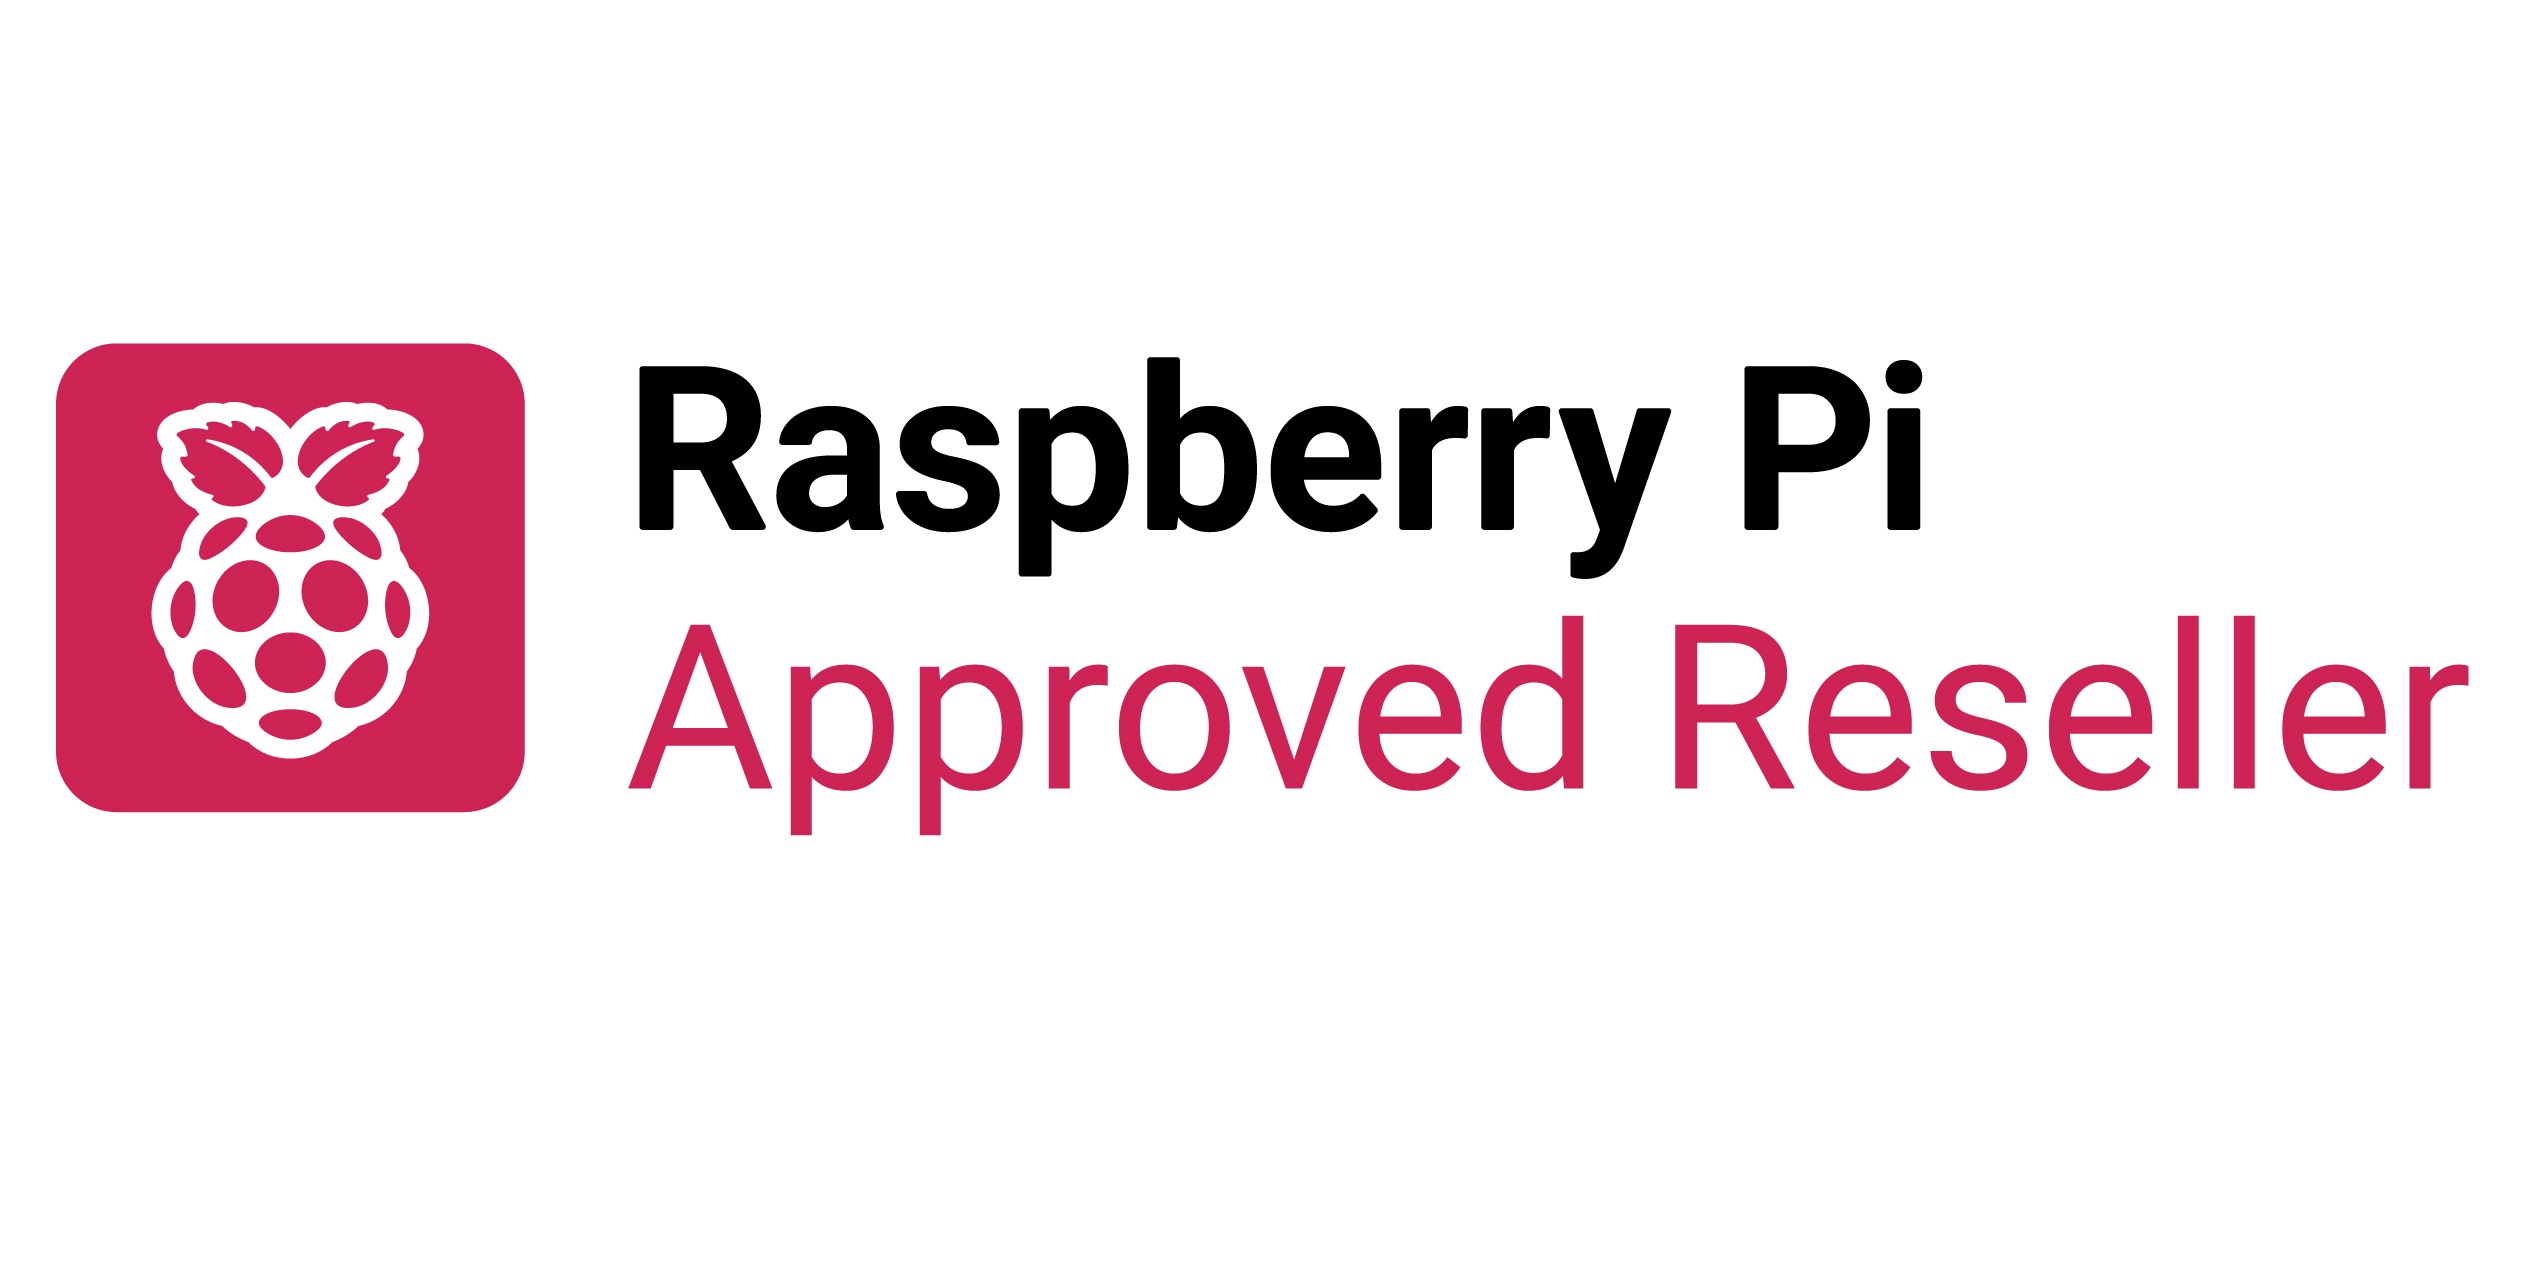 Raspberry Pi Reseller